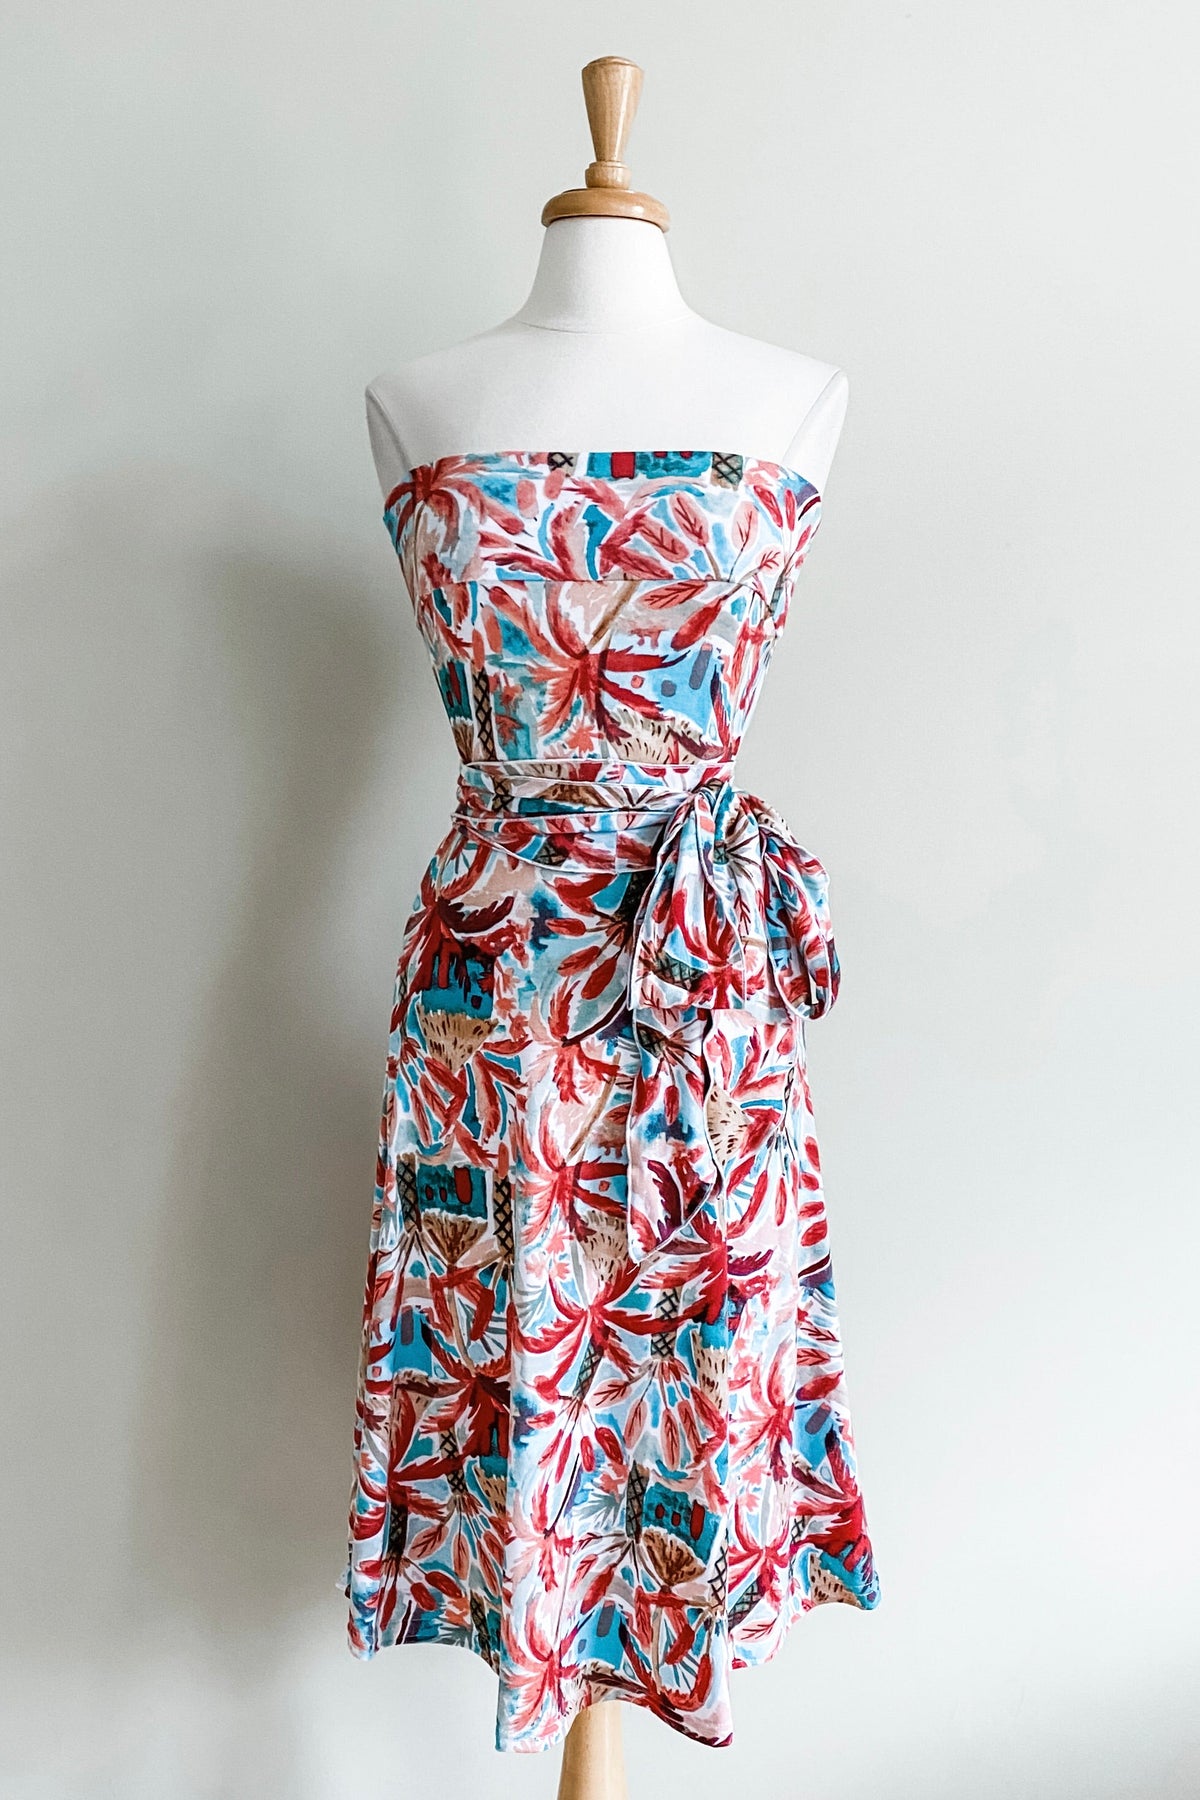 Diane Kroe Wear-Ever Dress in Prints (Terracotta Palm) - Warm Weather Capsule Collection